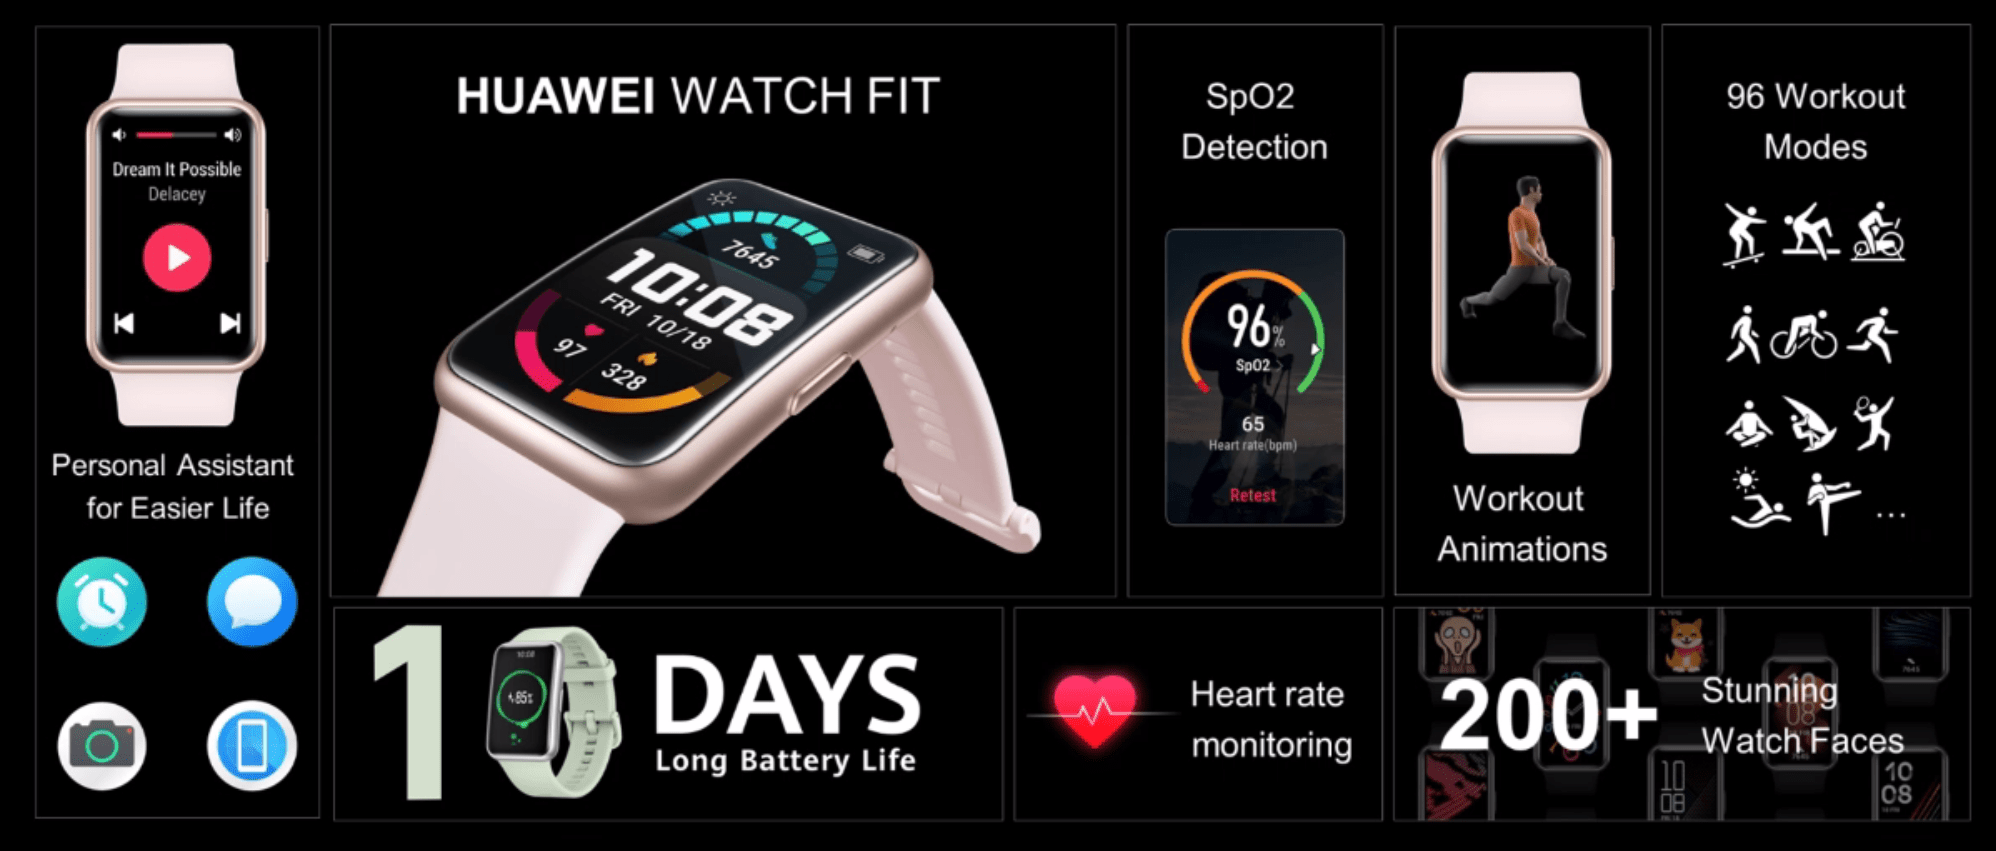 Регистрация часов huawei. Приложение для часов Huawei. One hope Huawei часы. Сон на часах Huawei Fit. Wearfit Pro часы.